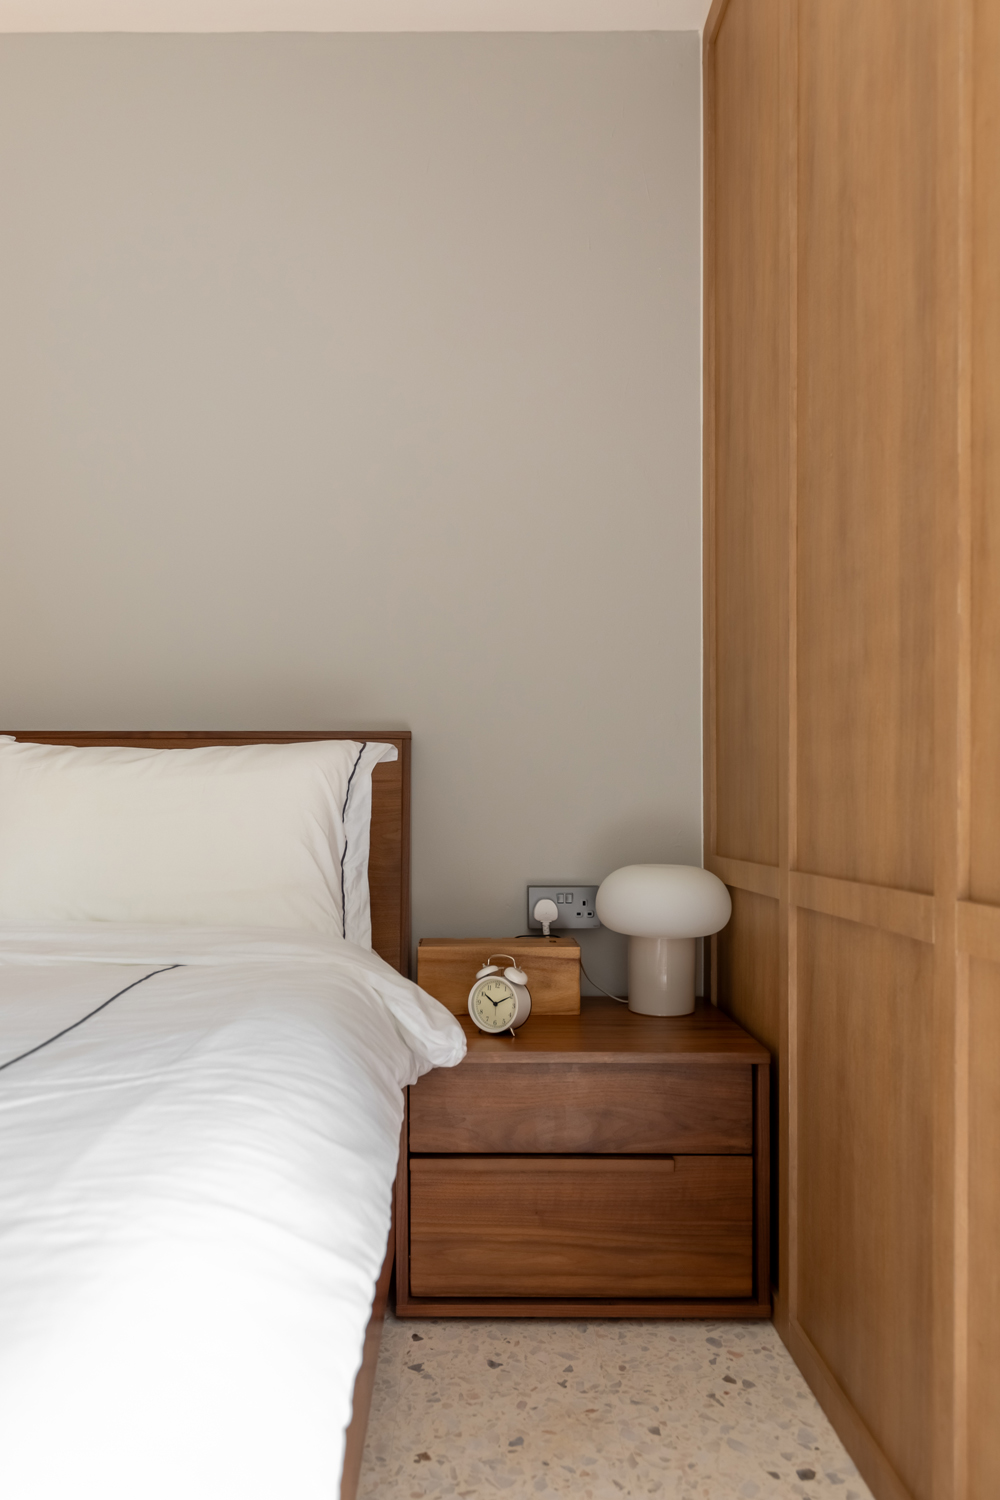 Industrial, Others, Scandinavian Design - Bedroom - HDB 4 Room - Design by U-Home Interior Design Pte Ltd